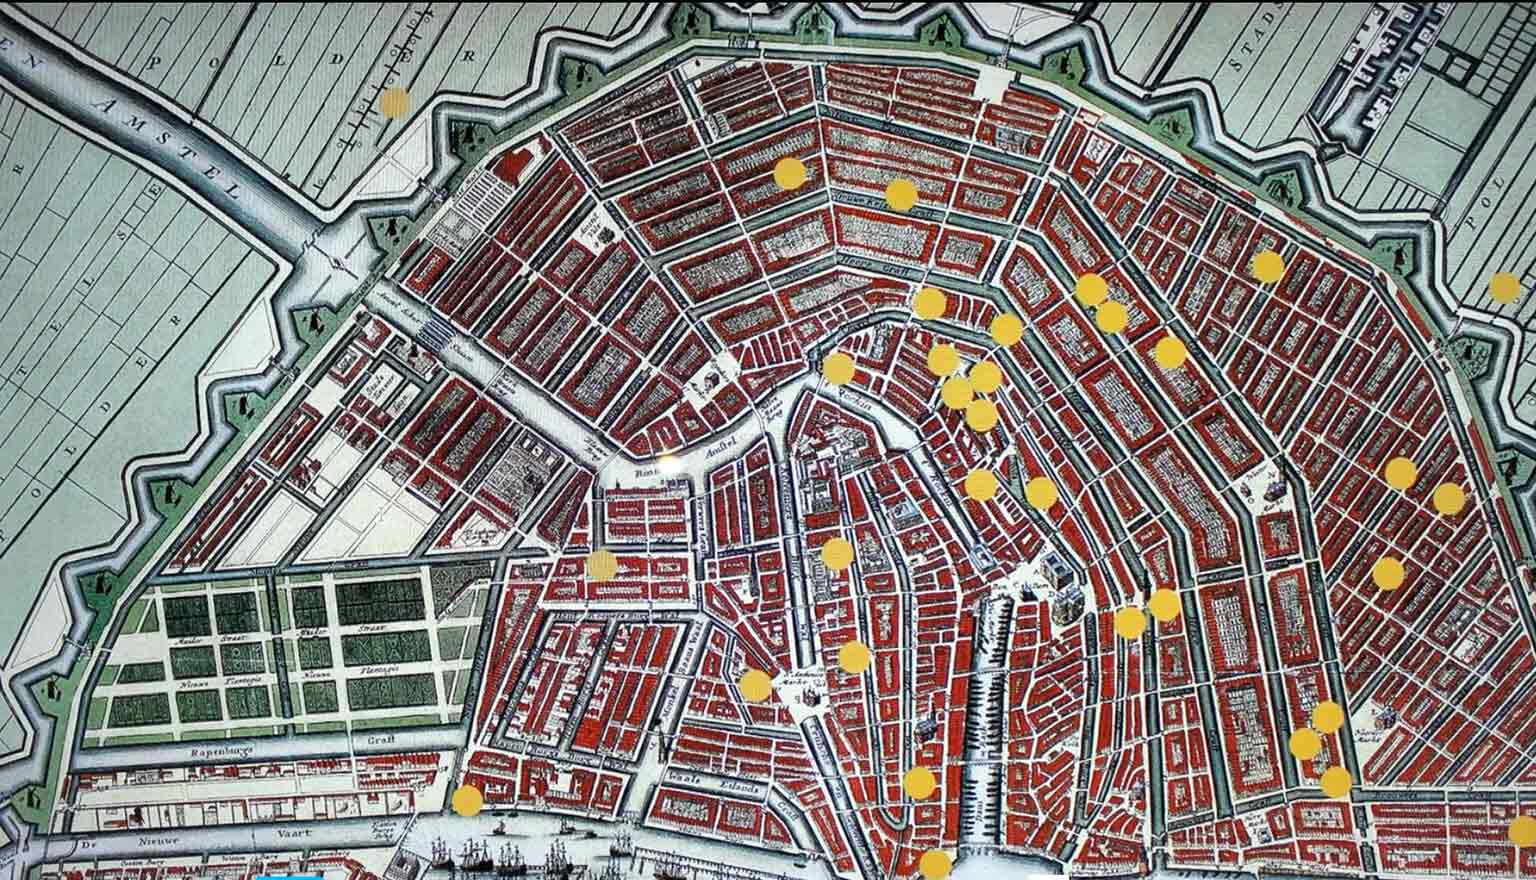 Map Catholic hidden churches in Amsterdam, 1578-1853